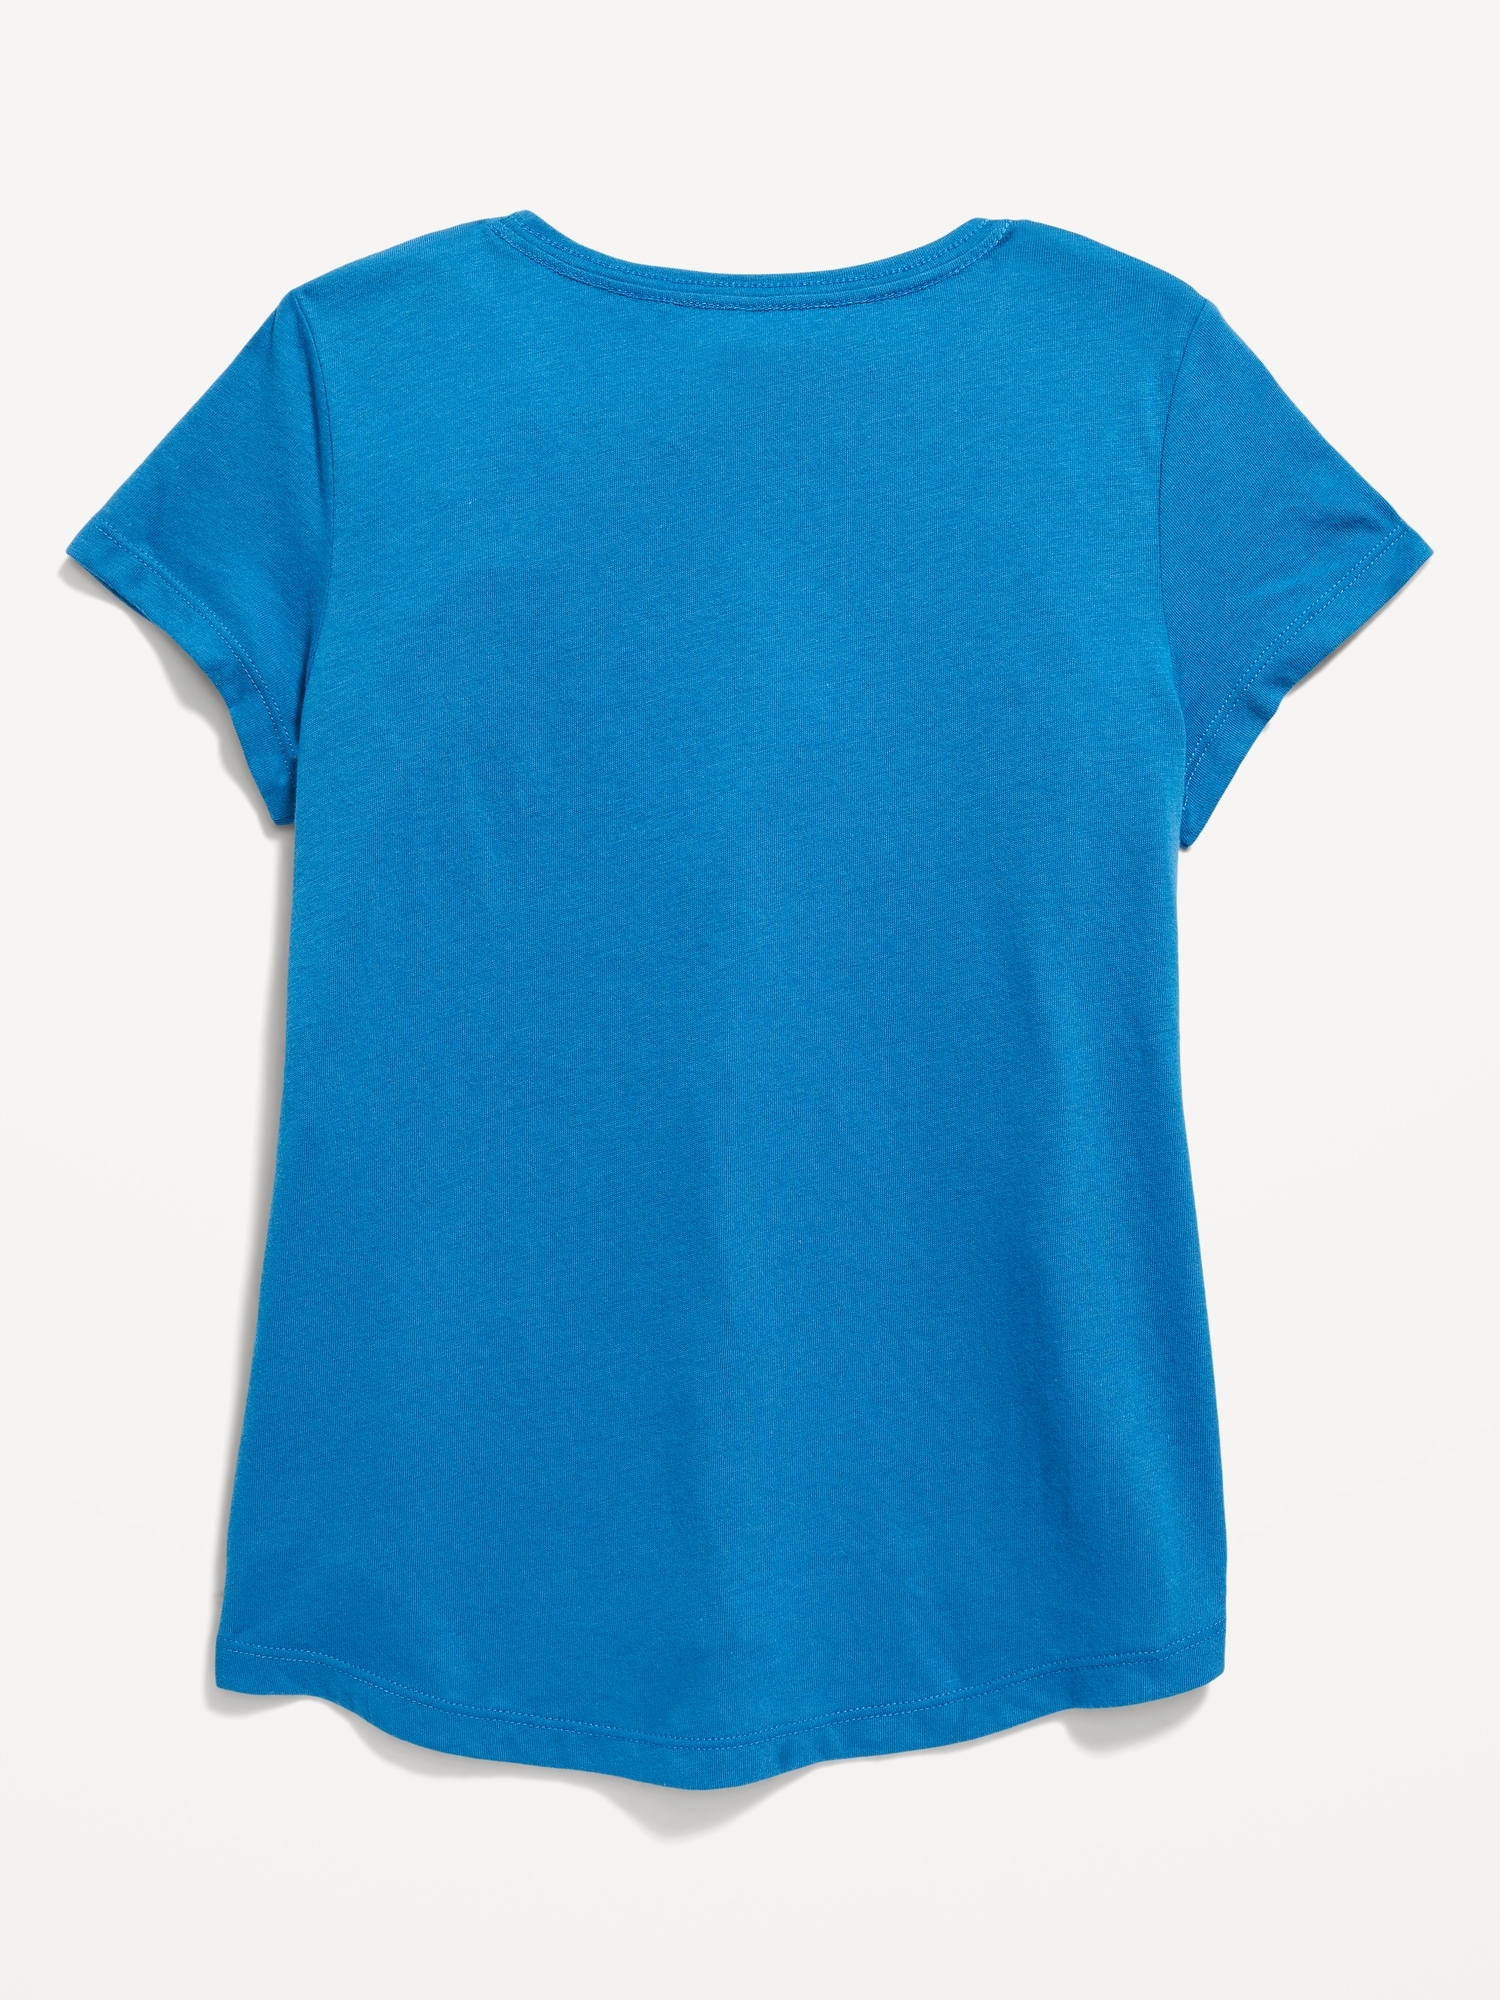 Softest Short-Sleeve Heart-Pocket T-Shirt for Girls | Old Navy